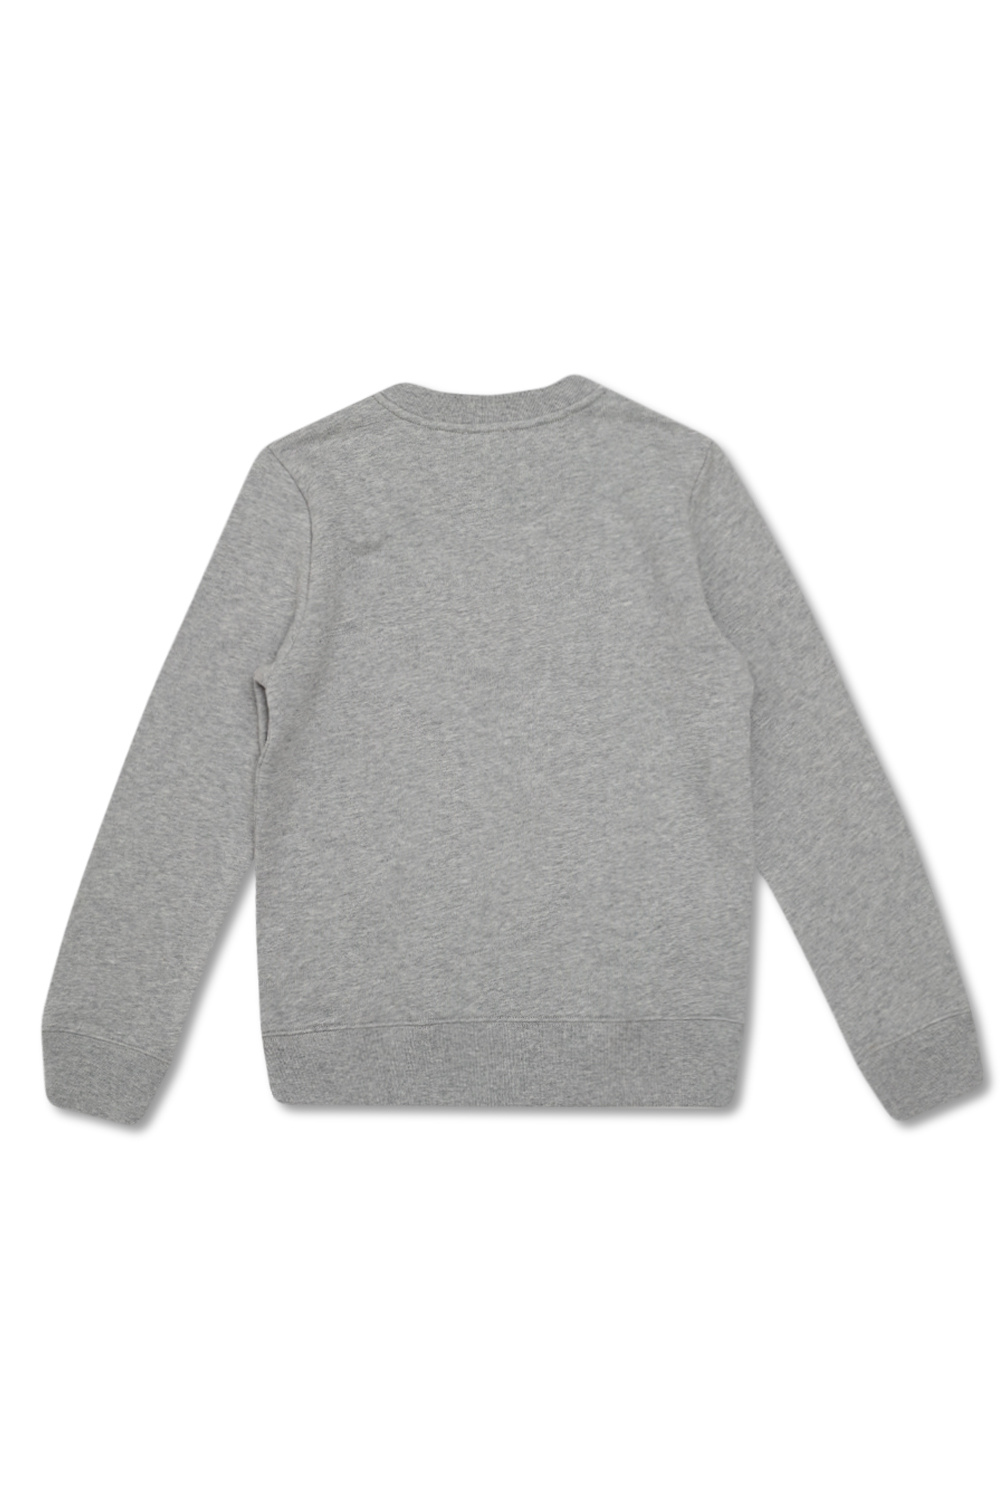 burberry round Kids ‘Joel’ sweatshirt with logo